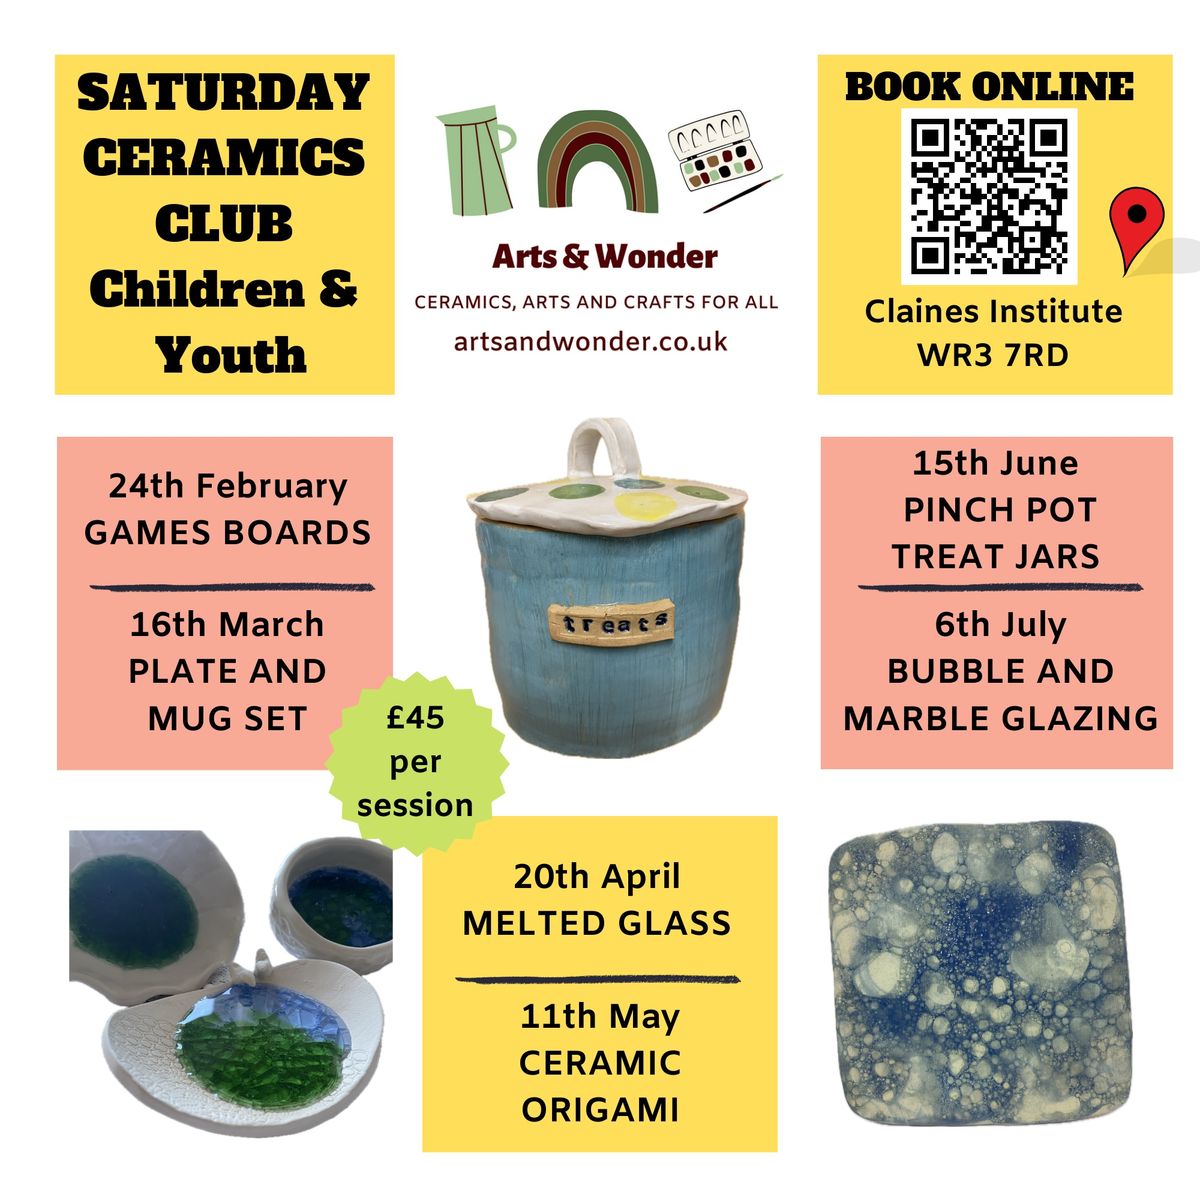 Ceramics Club Saturdays - Children and Youth